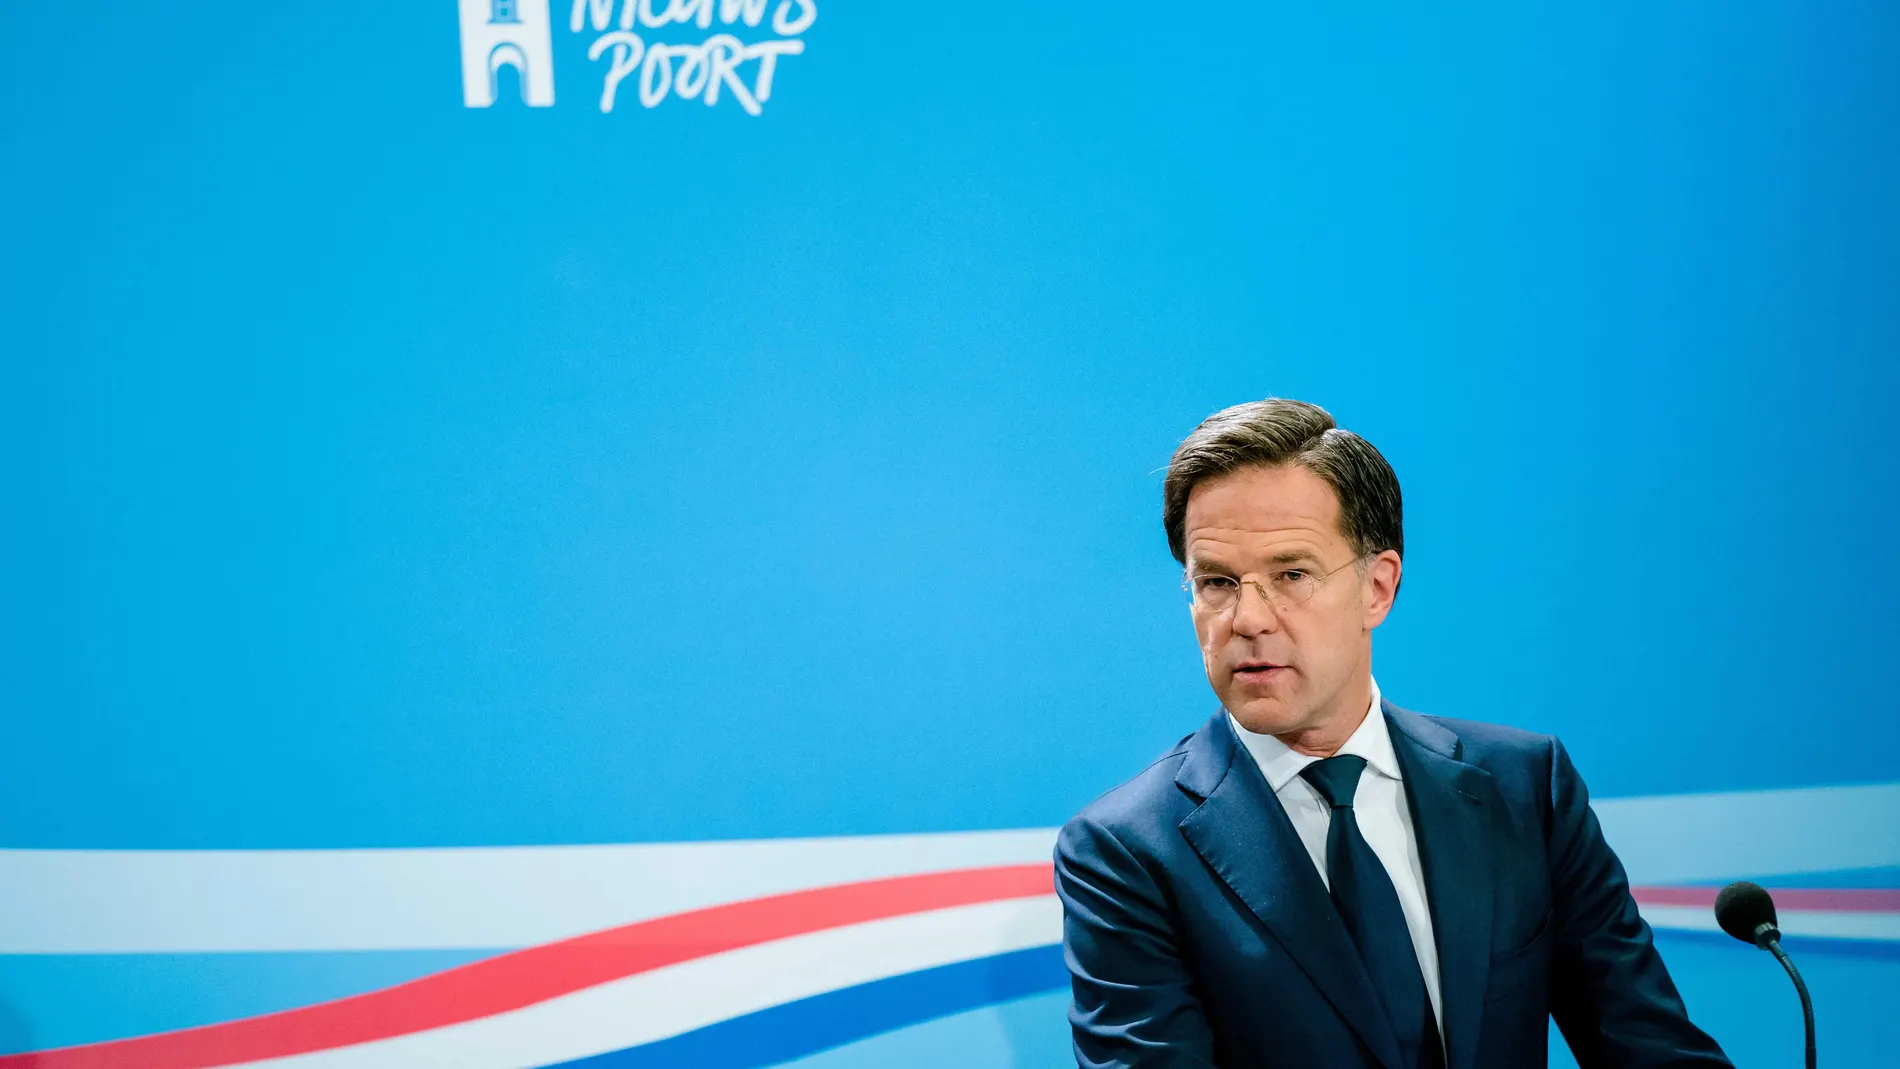 Dutch Prime Minister Mark Rutte press conference